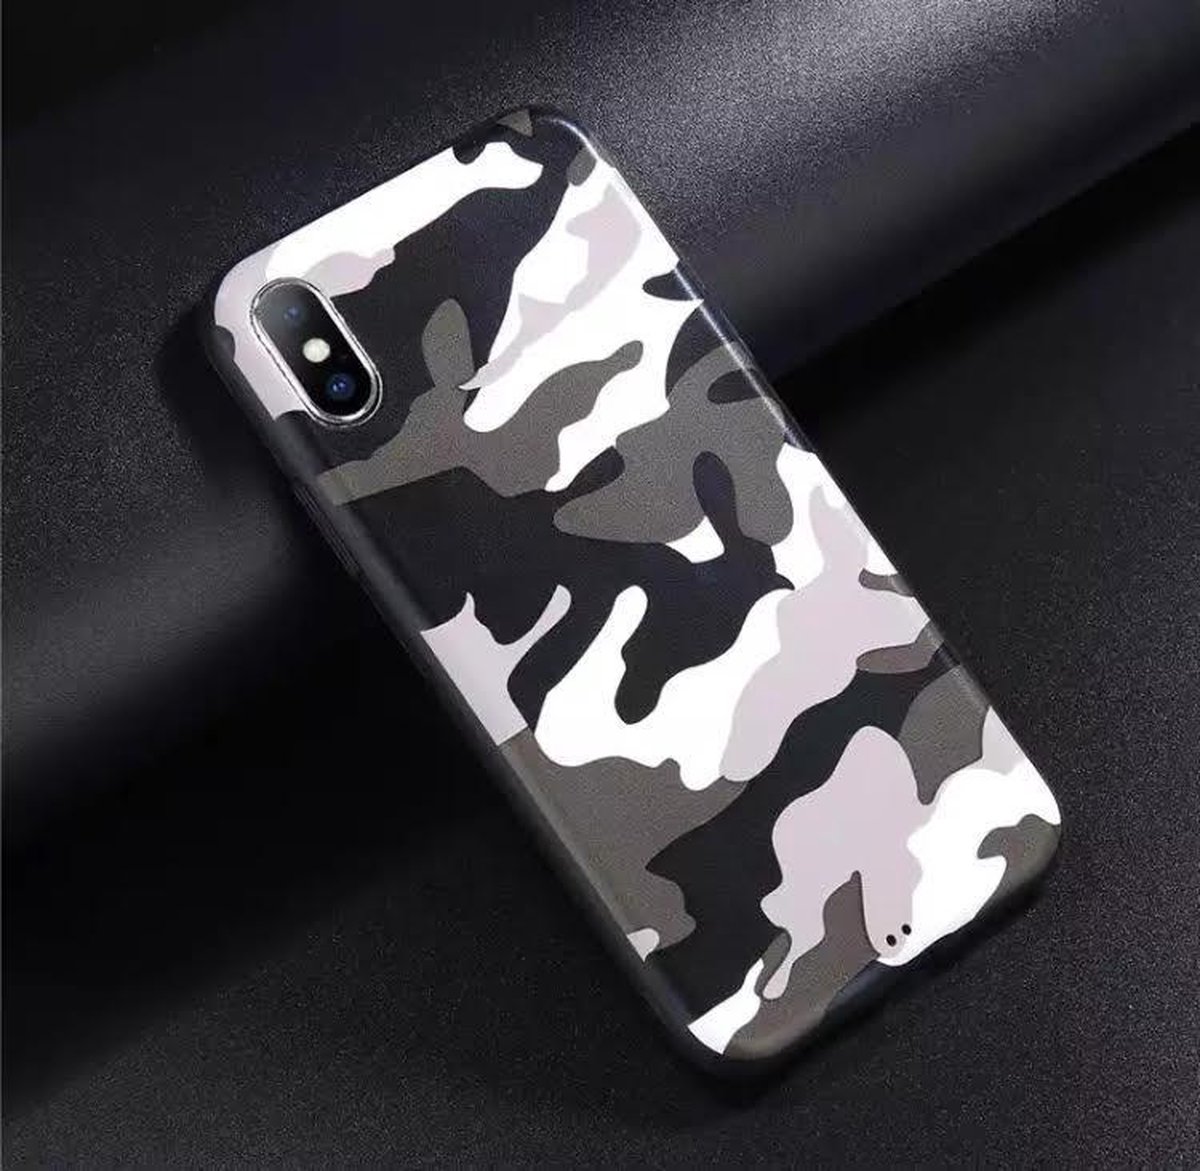 Chemicus Stoffig Er is een trend Designer leger print iPhone 6/ 6s achterkant hoesje - Camouflage | bol.com